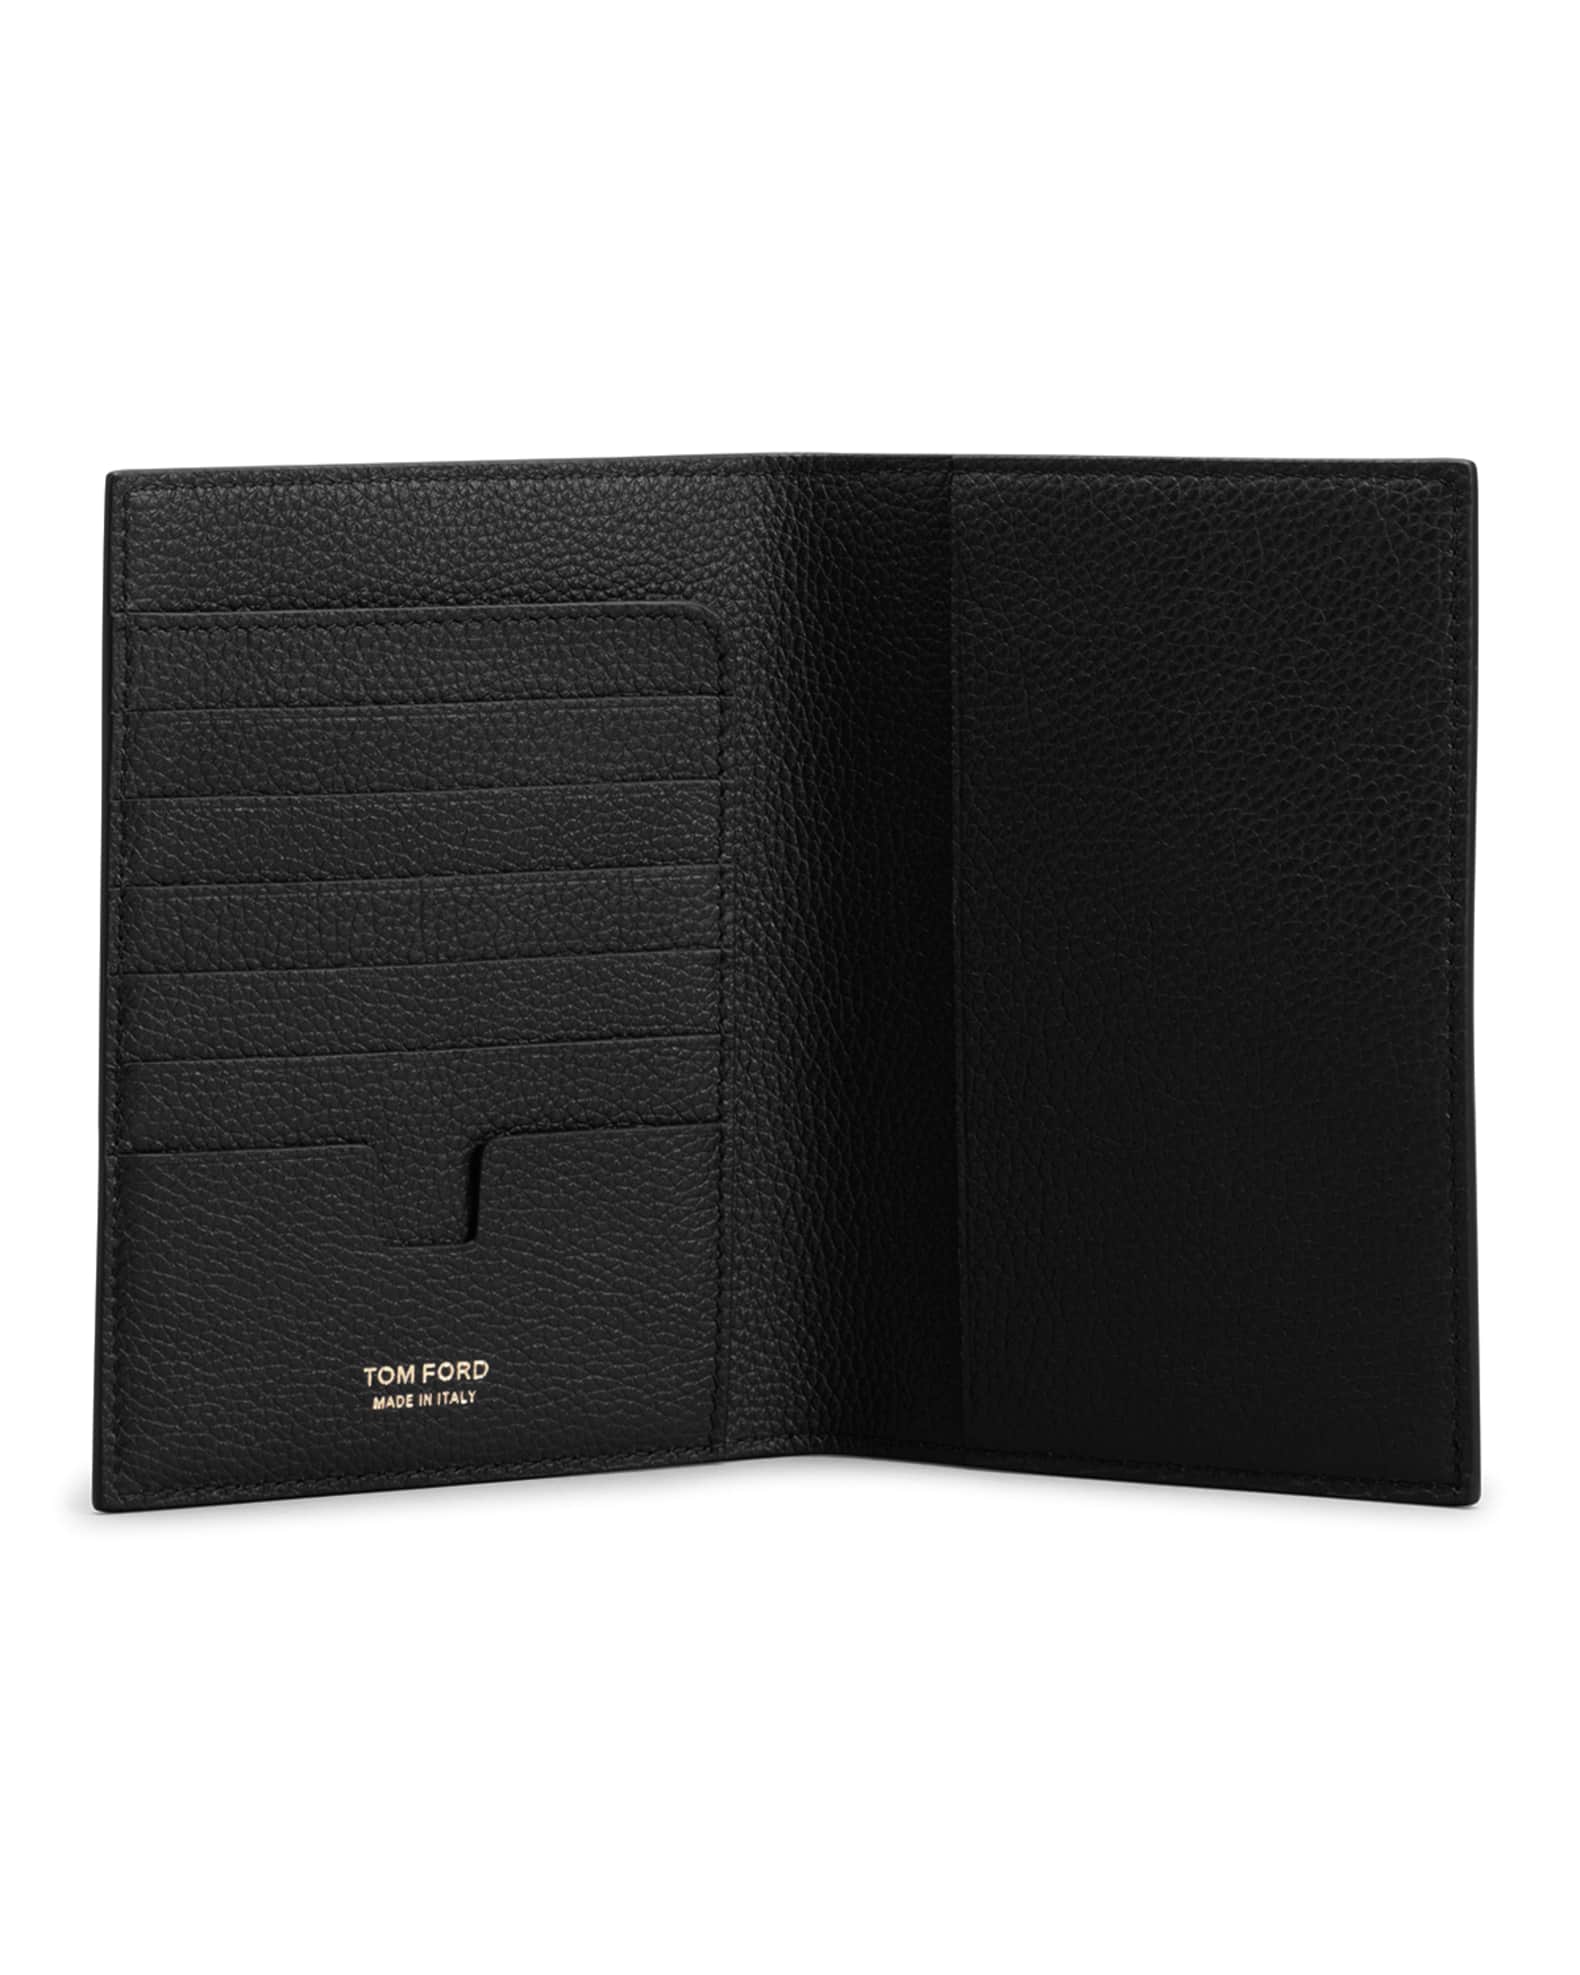 TOM FORD Grain Leather Passport Holder | Neiman Marcus